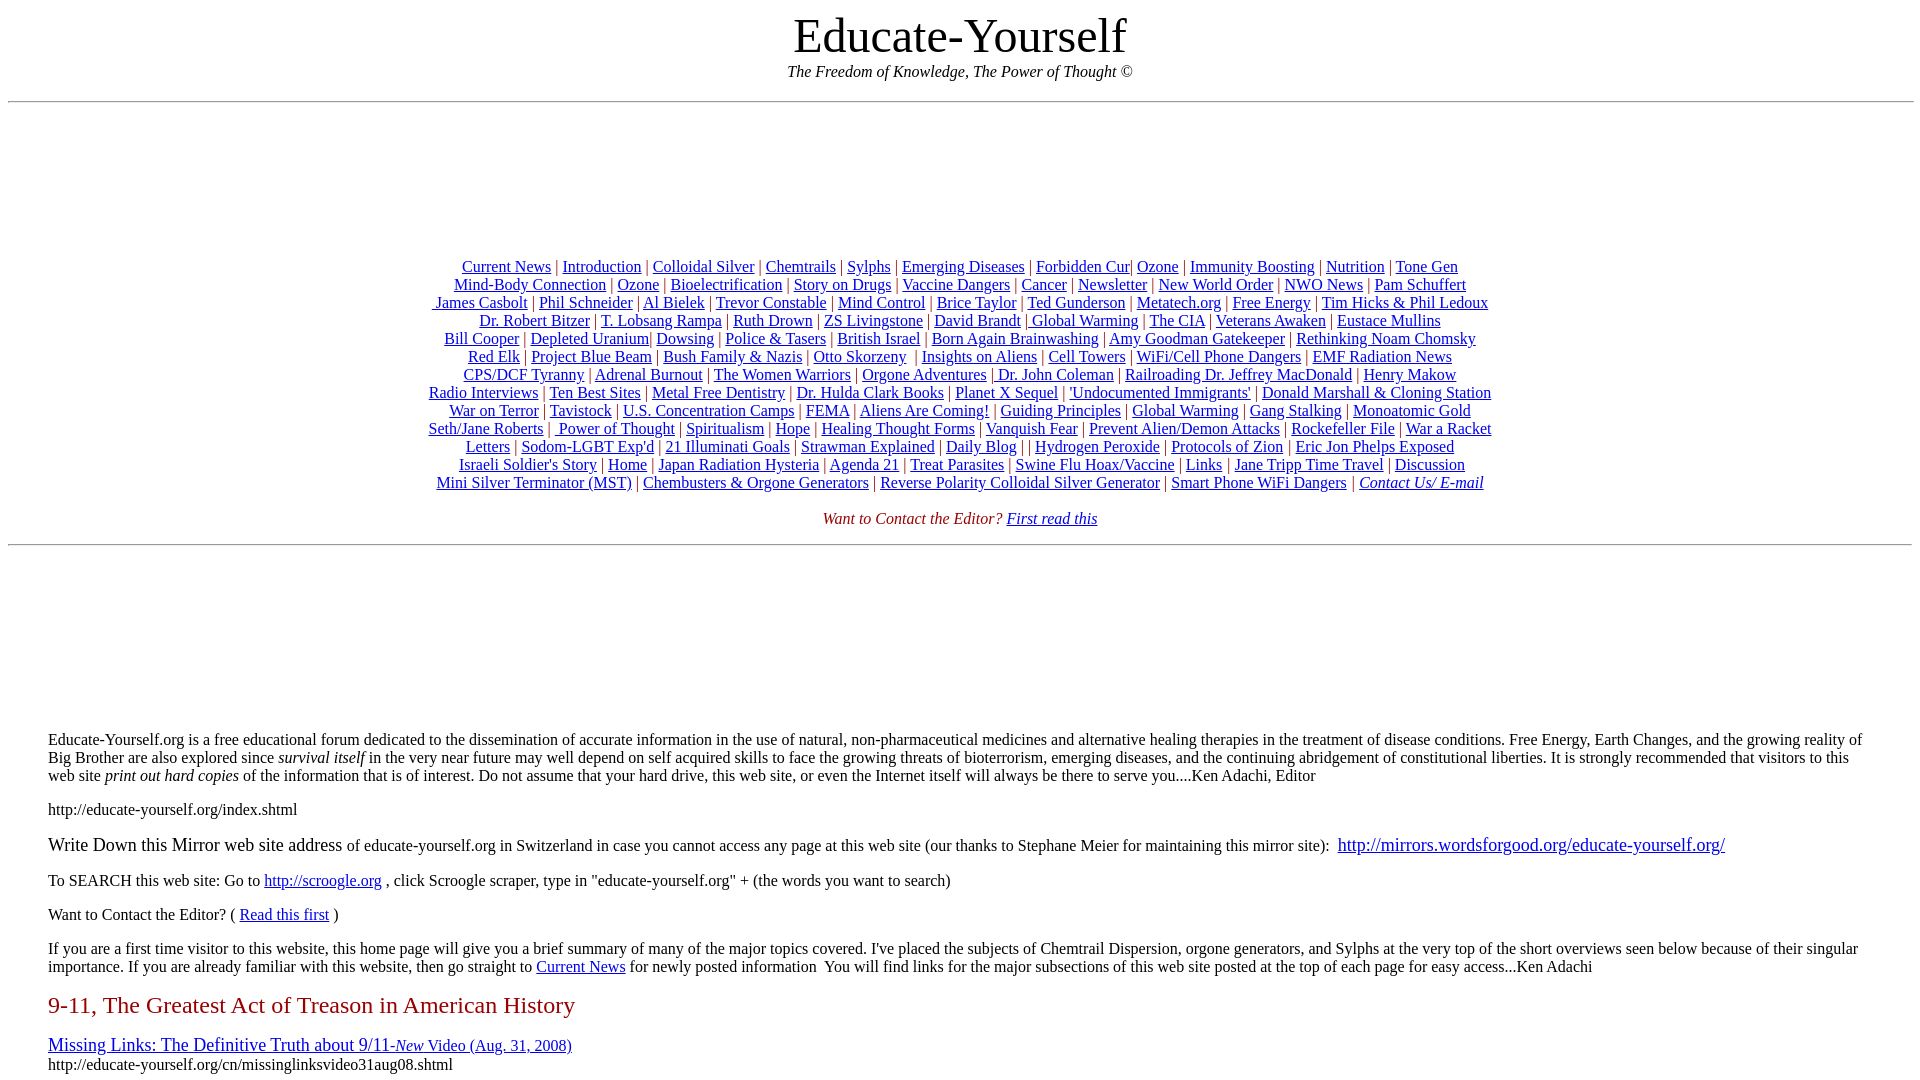 Estado web educate-yourself.org está   ONLINE